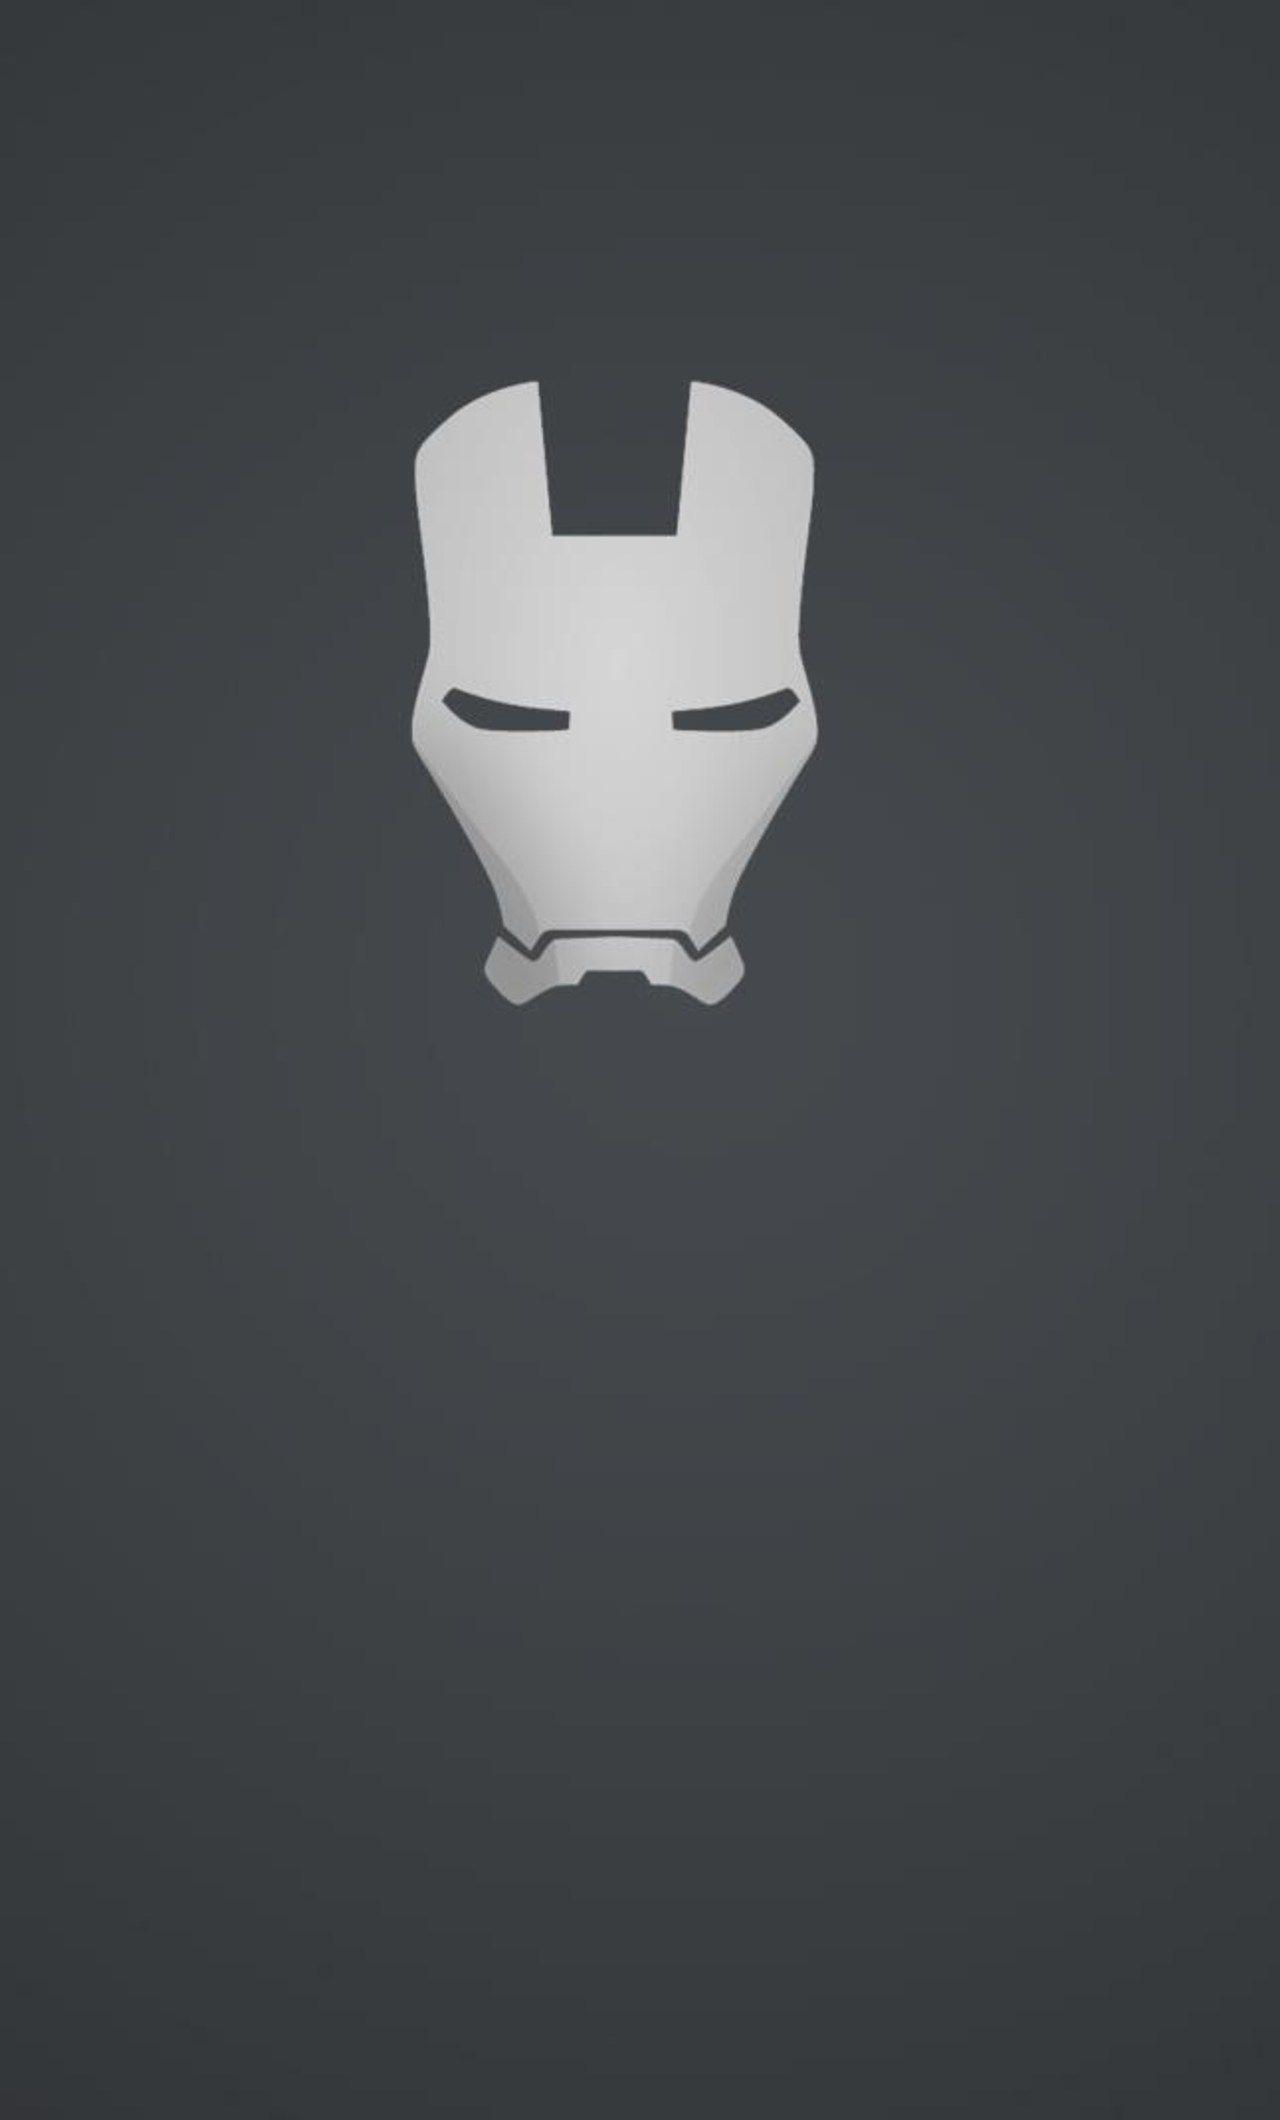 Iron Man Simple 3 iPhone 6 HD 4k Wallpaper, Image